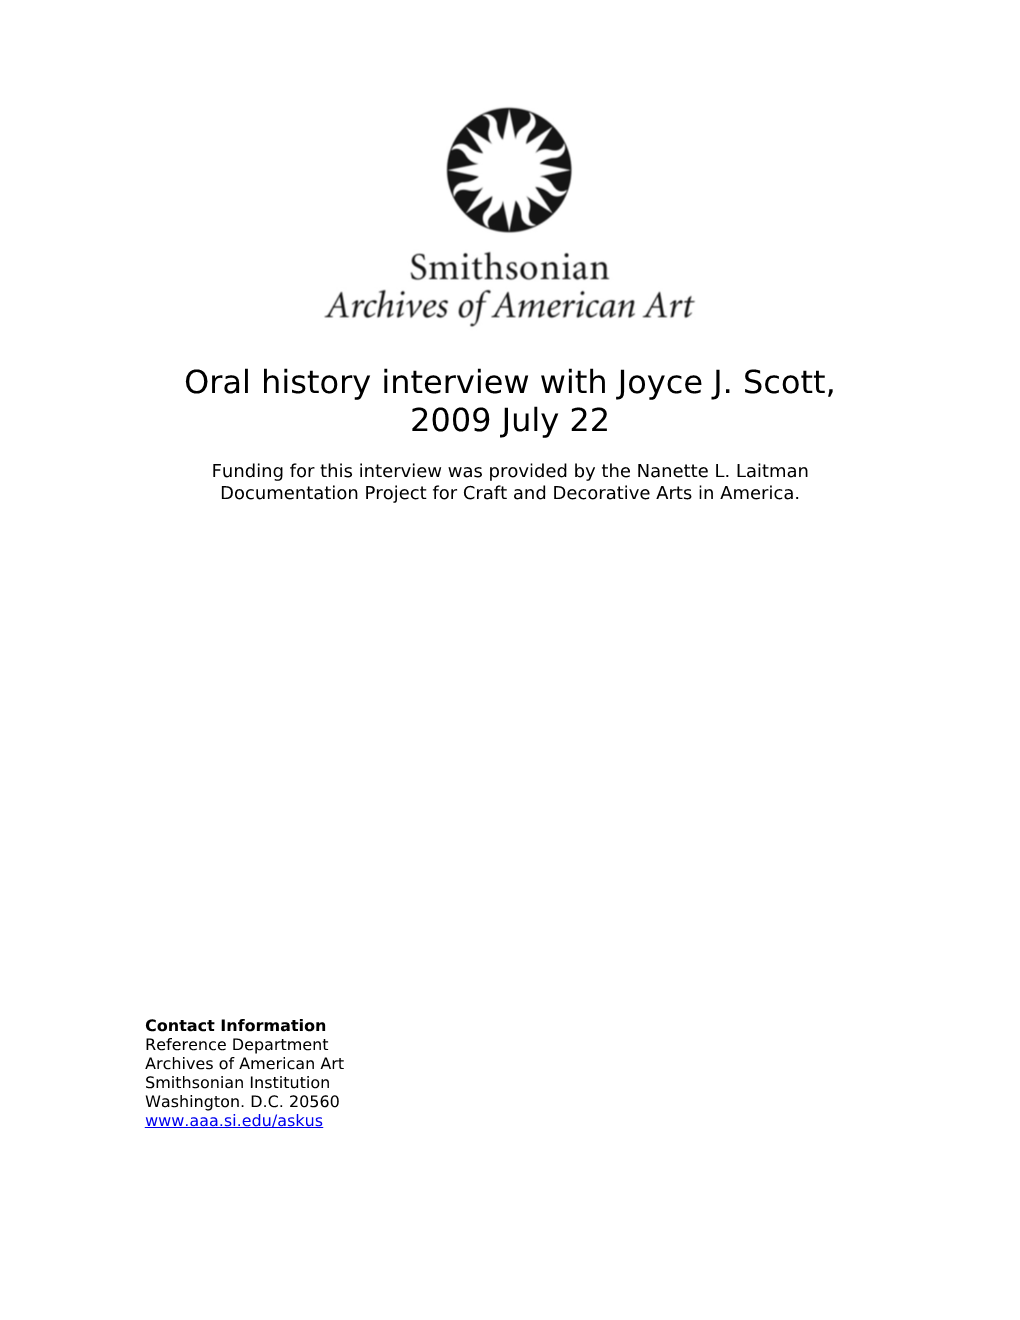 Oral History Interview with Joyce J. Scott, 2009 July 22